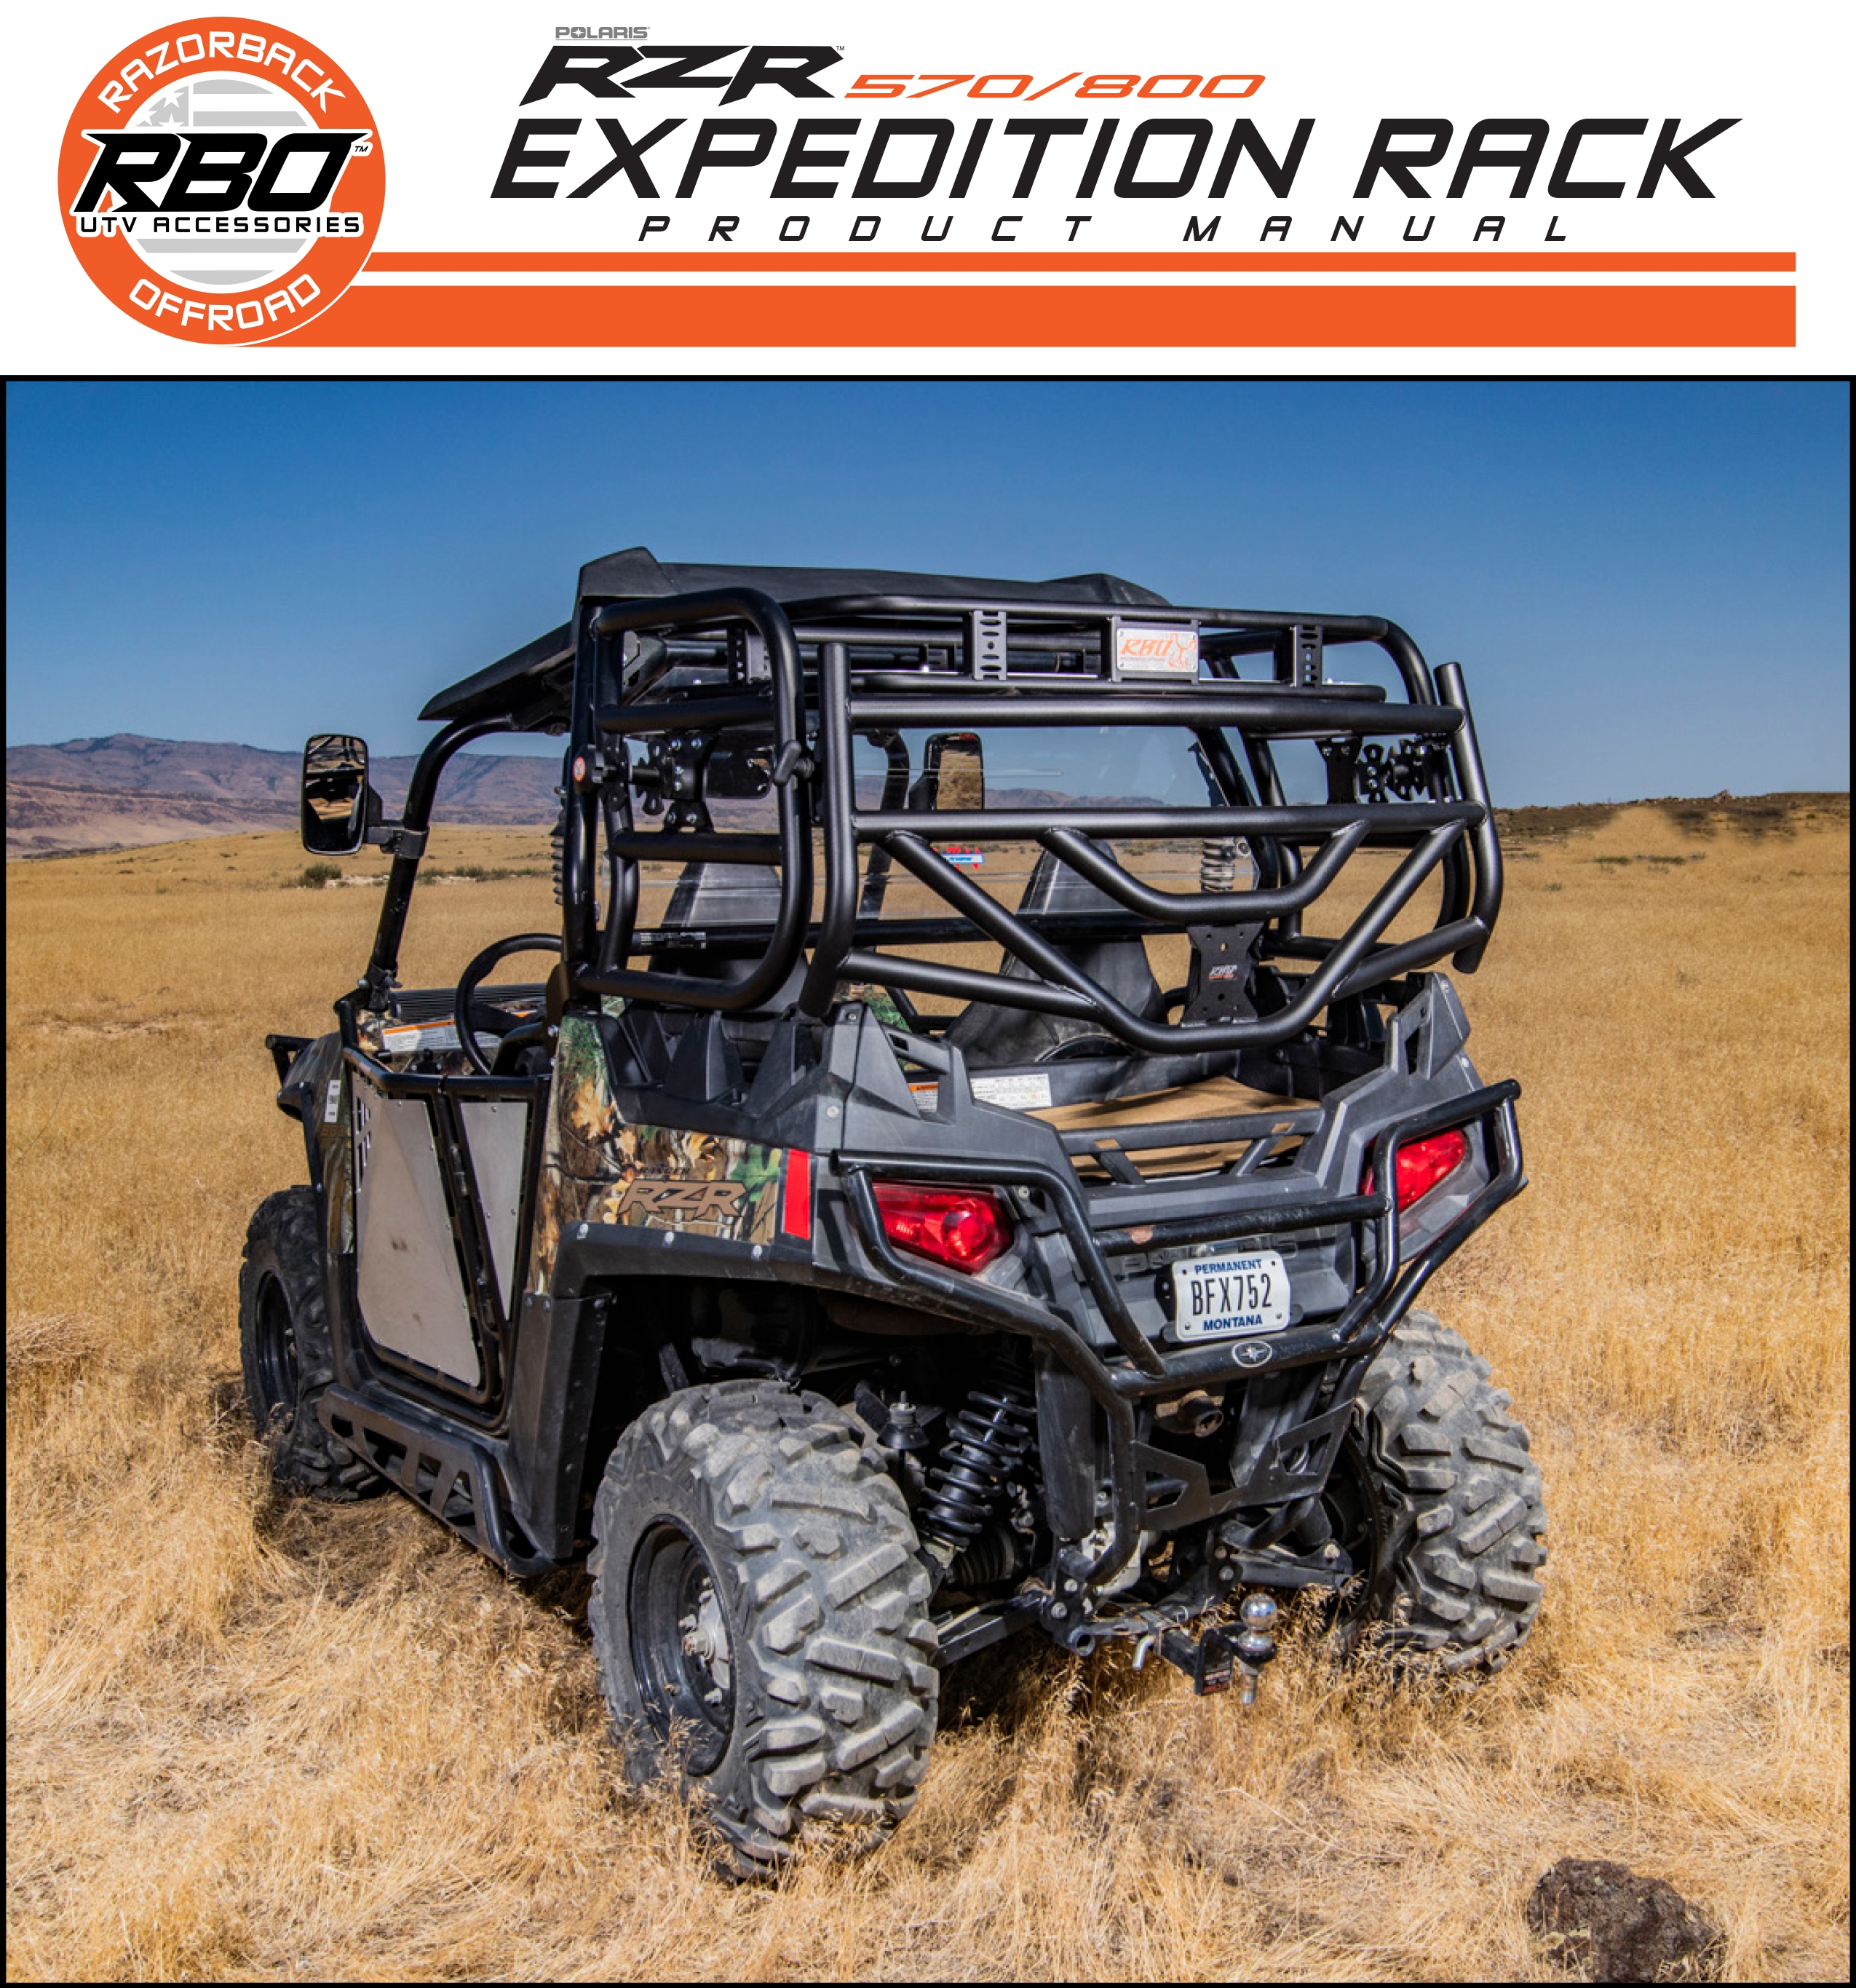 Polaris RZR 570/800 Expedition Rack Product Manual